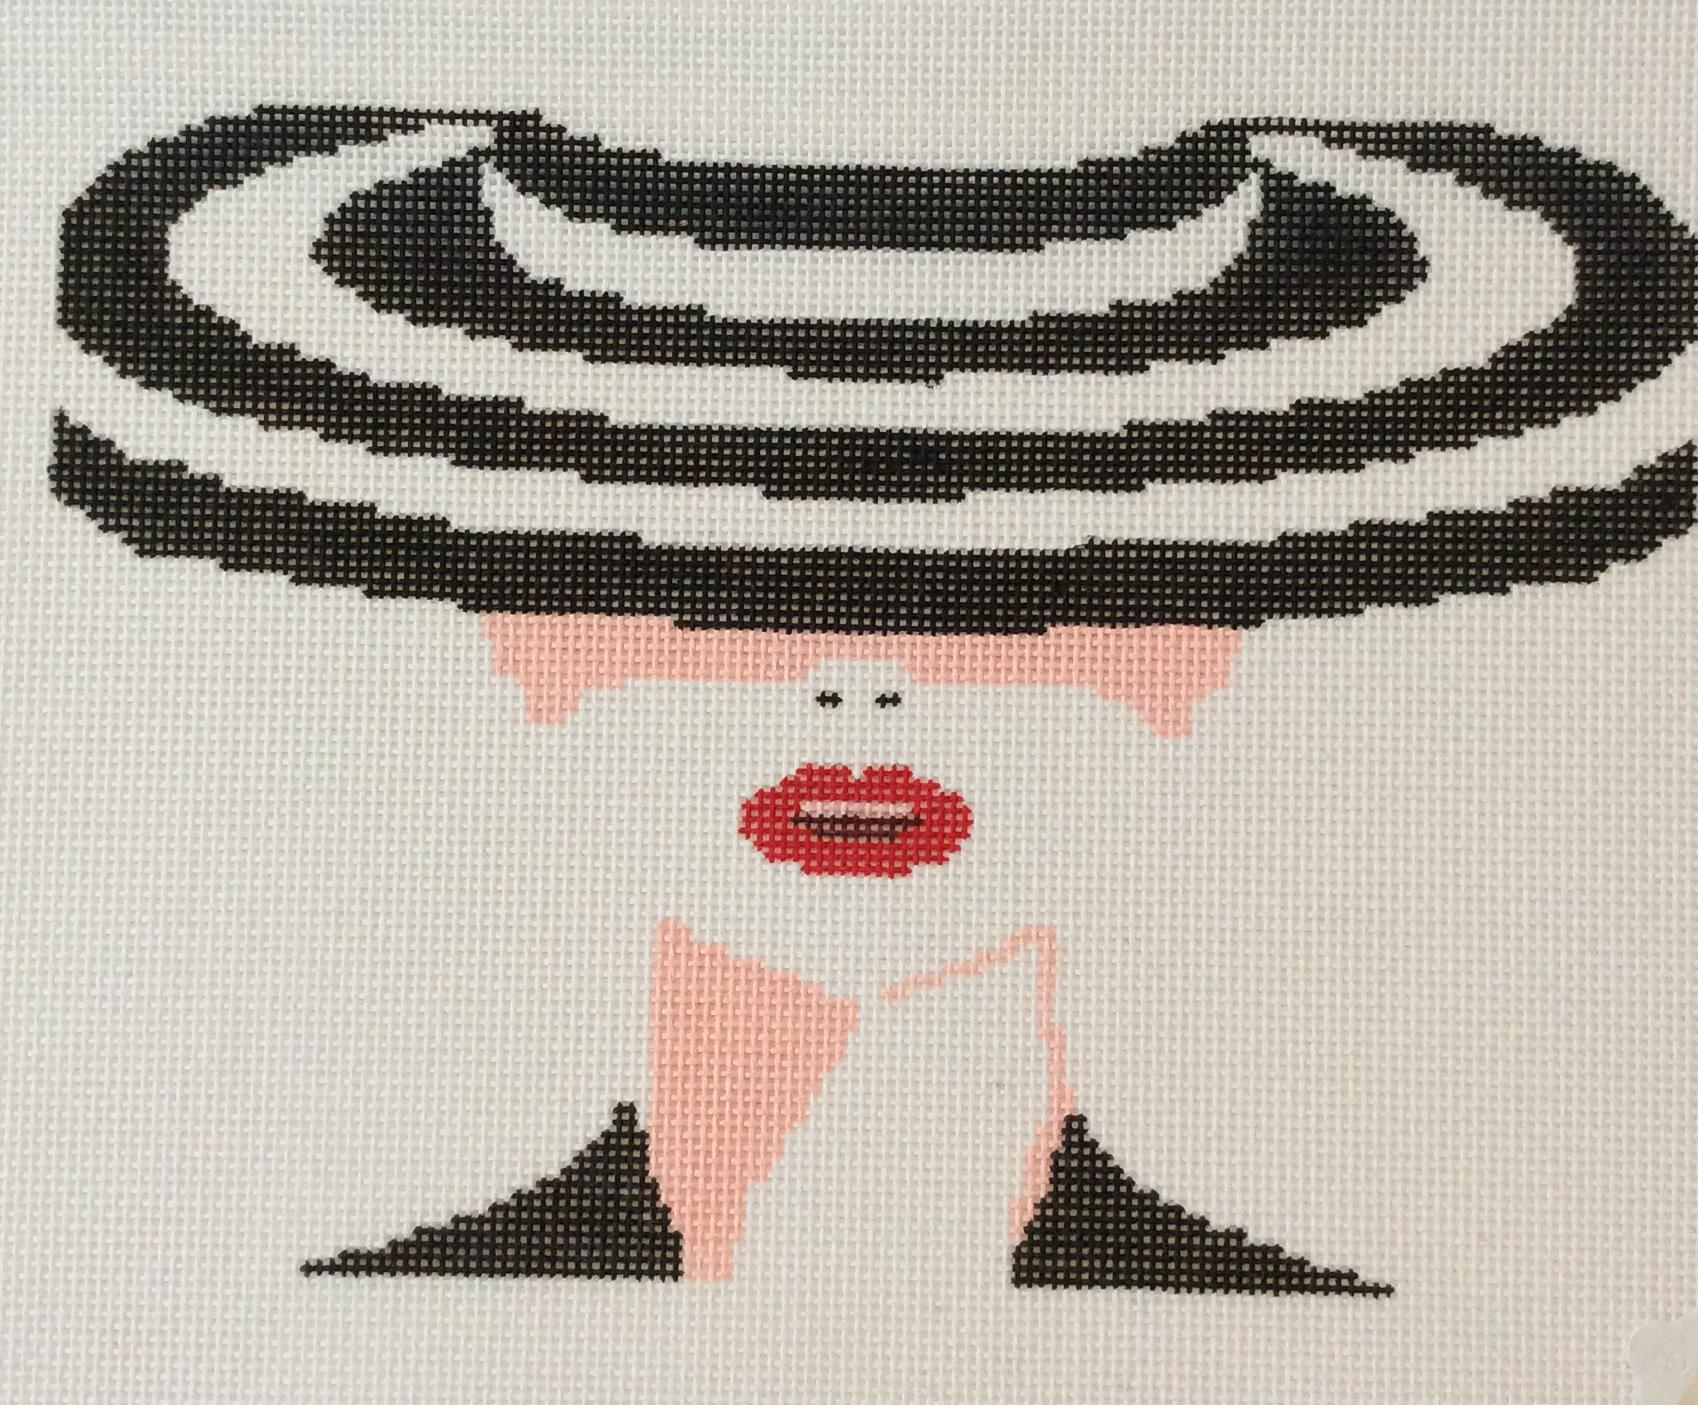 Lady in Black/White Hat